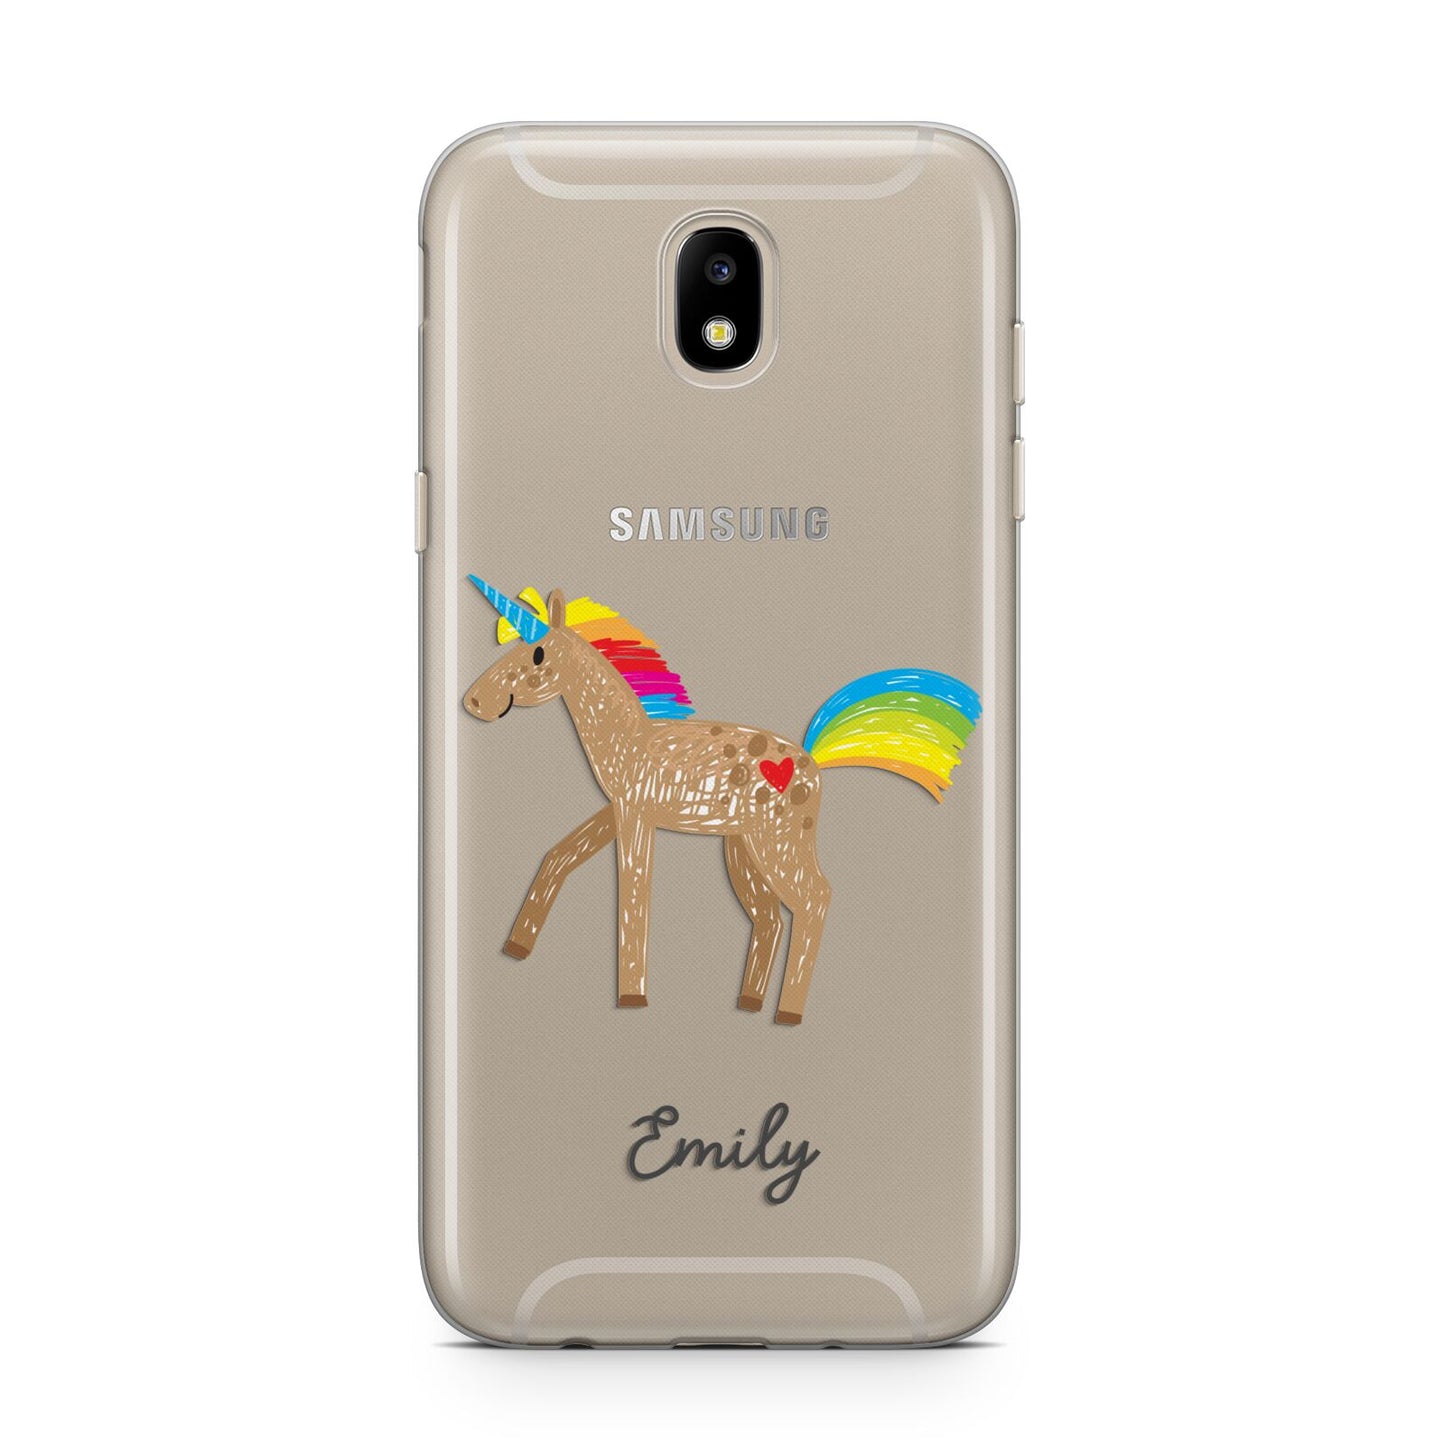 Personalised Unicorn with Name Samsung J5 2017 Case